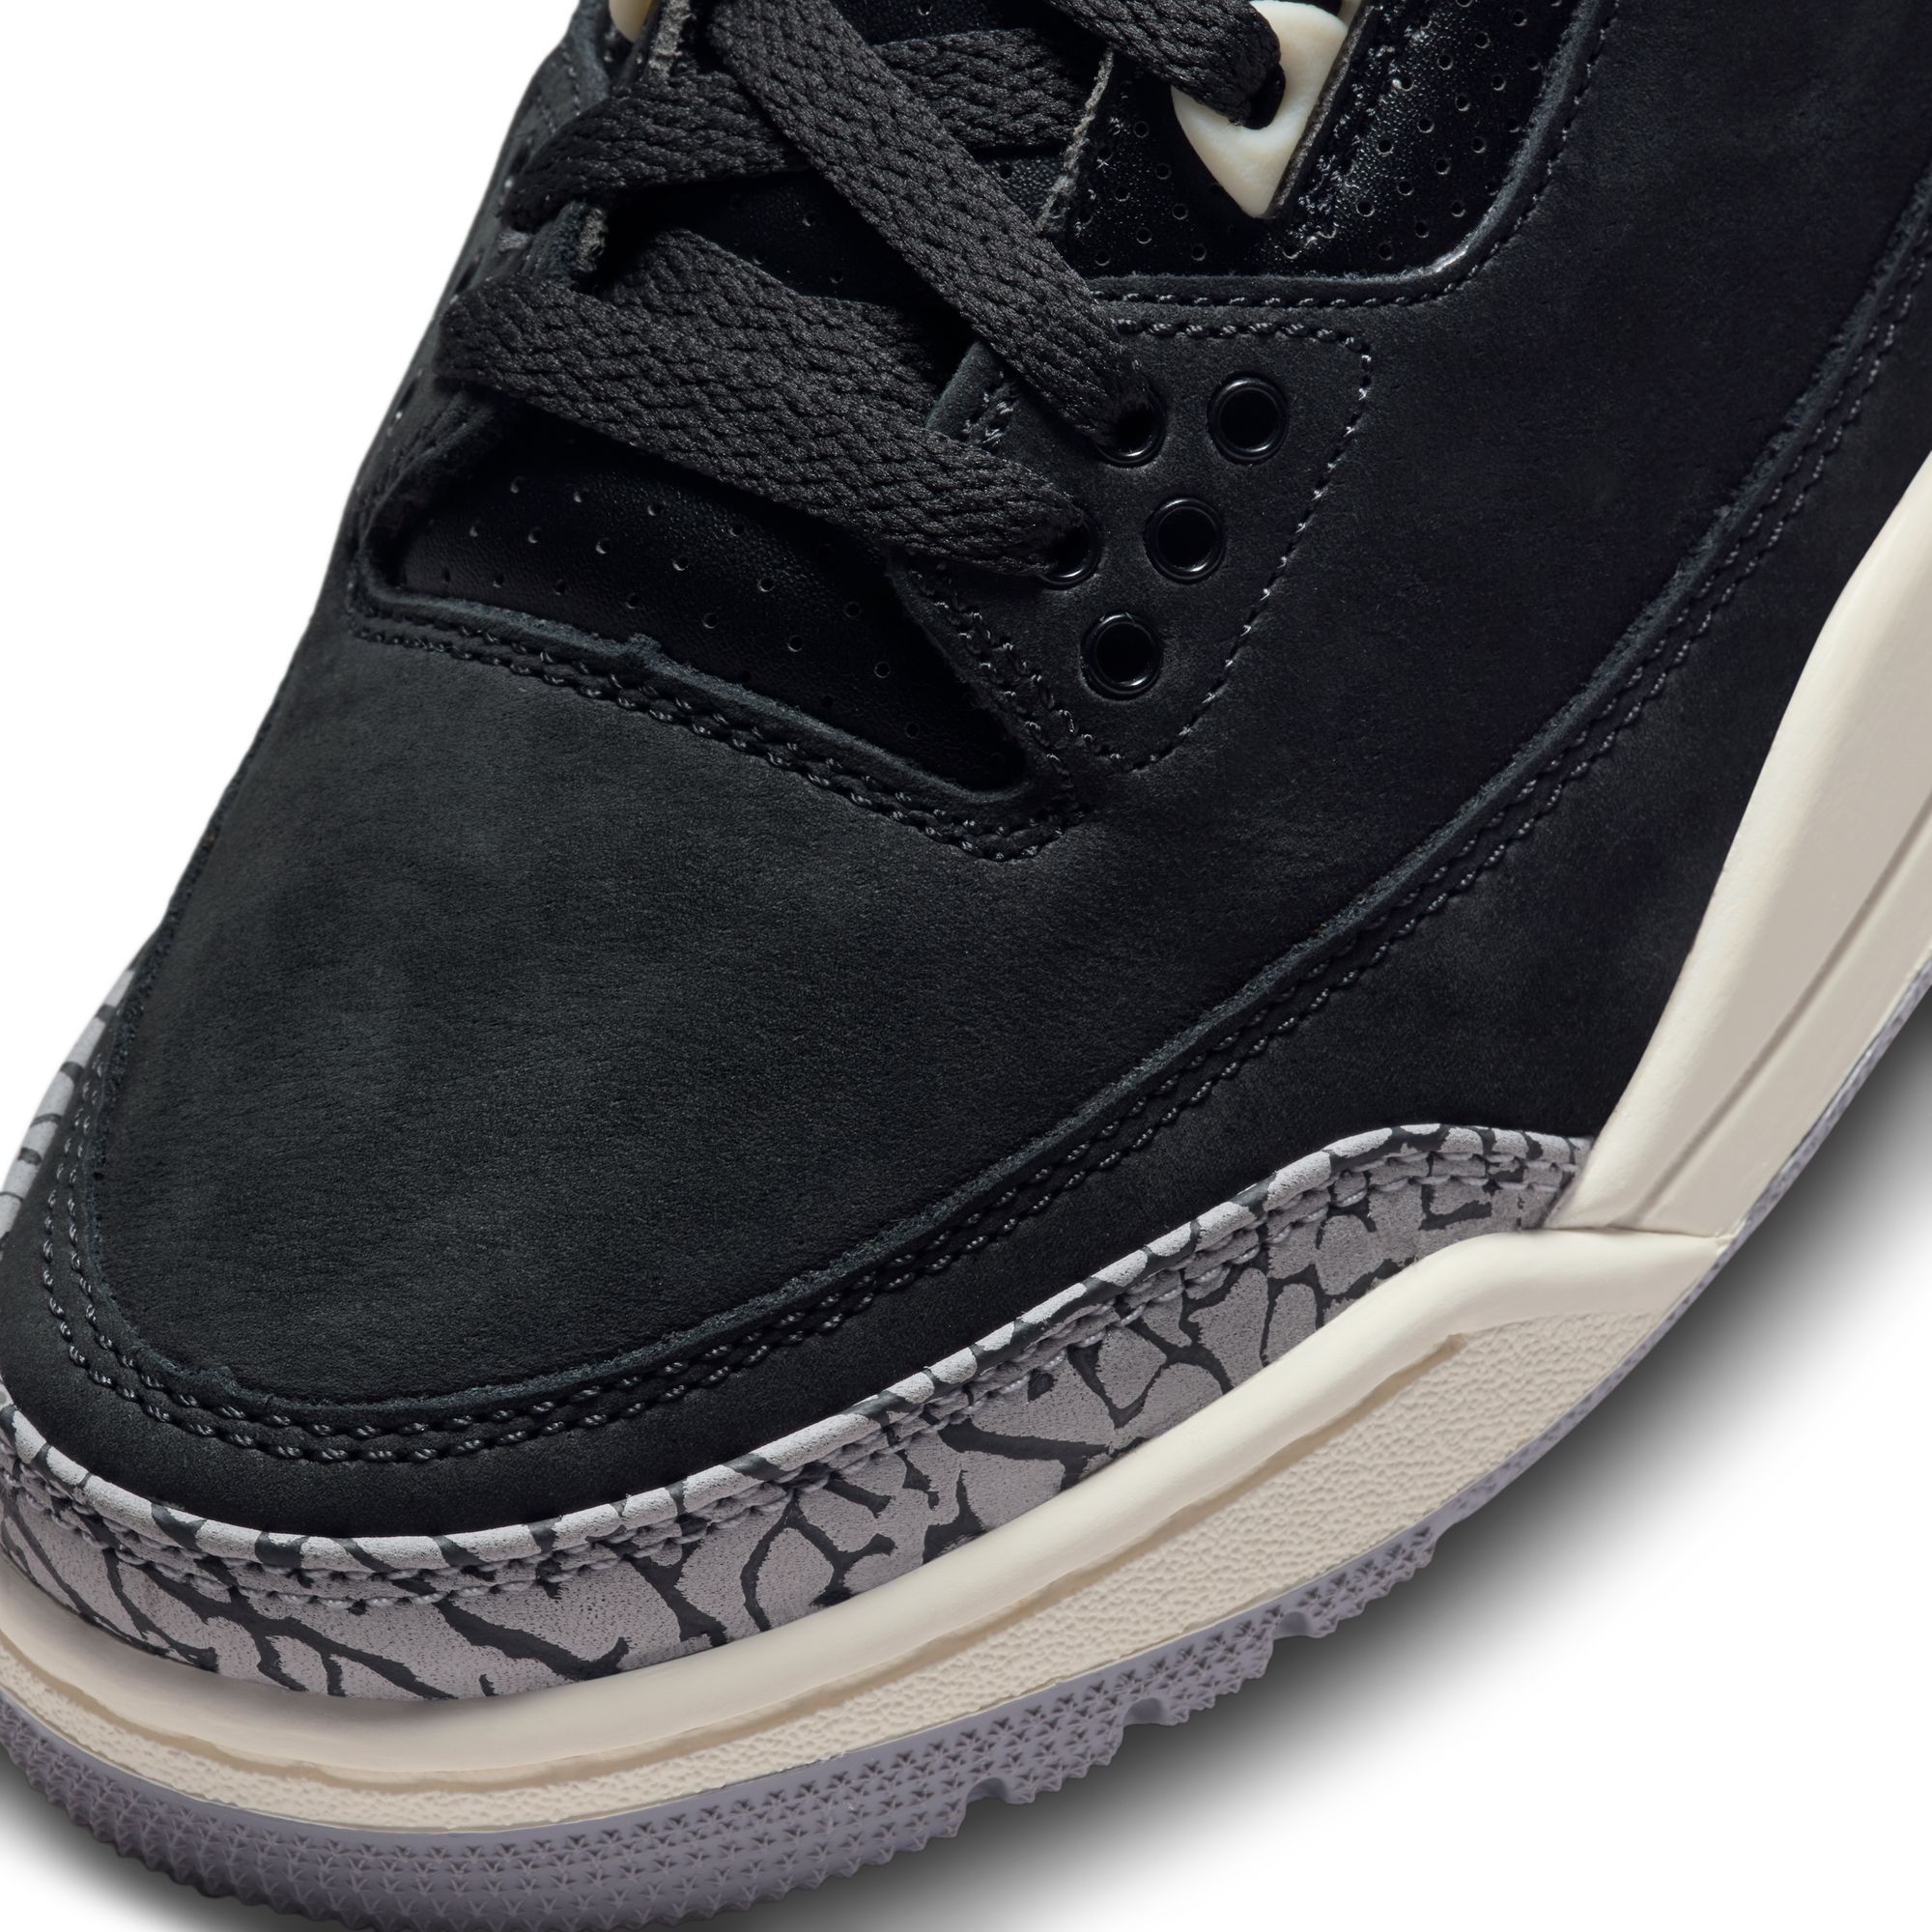 Jordan Air Jordan 3 Retro Off Noir Womens Lifestyle Shoes Black